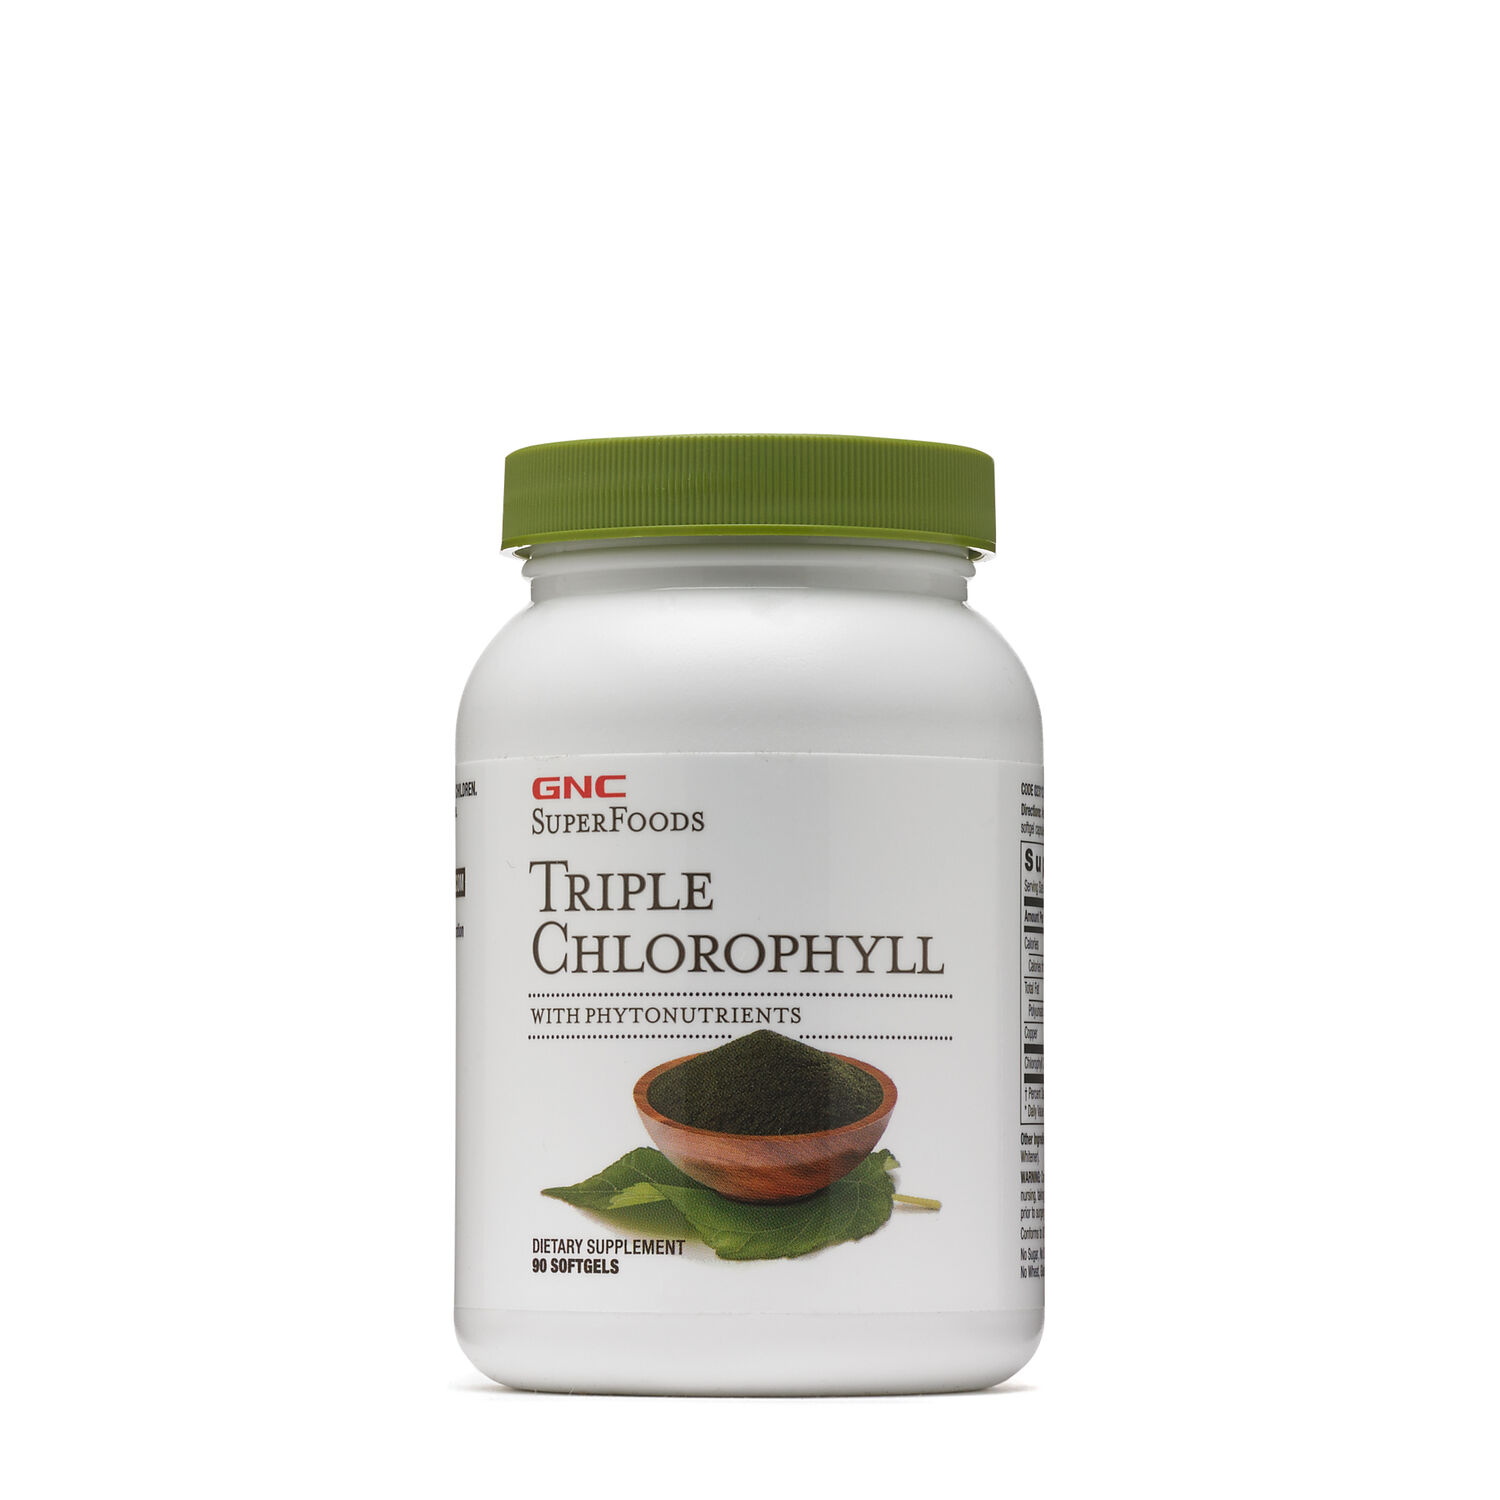 GNC SuperFoods Triple Chlorophyll - 90 Softgels (90 Servings)